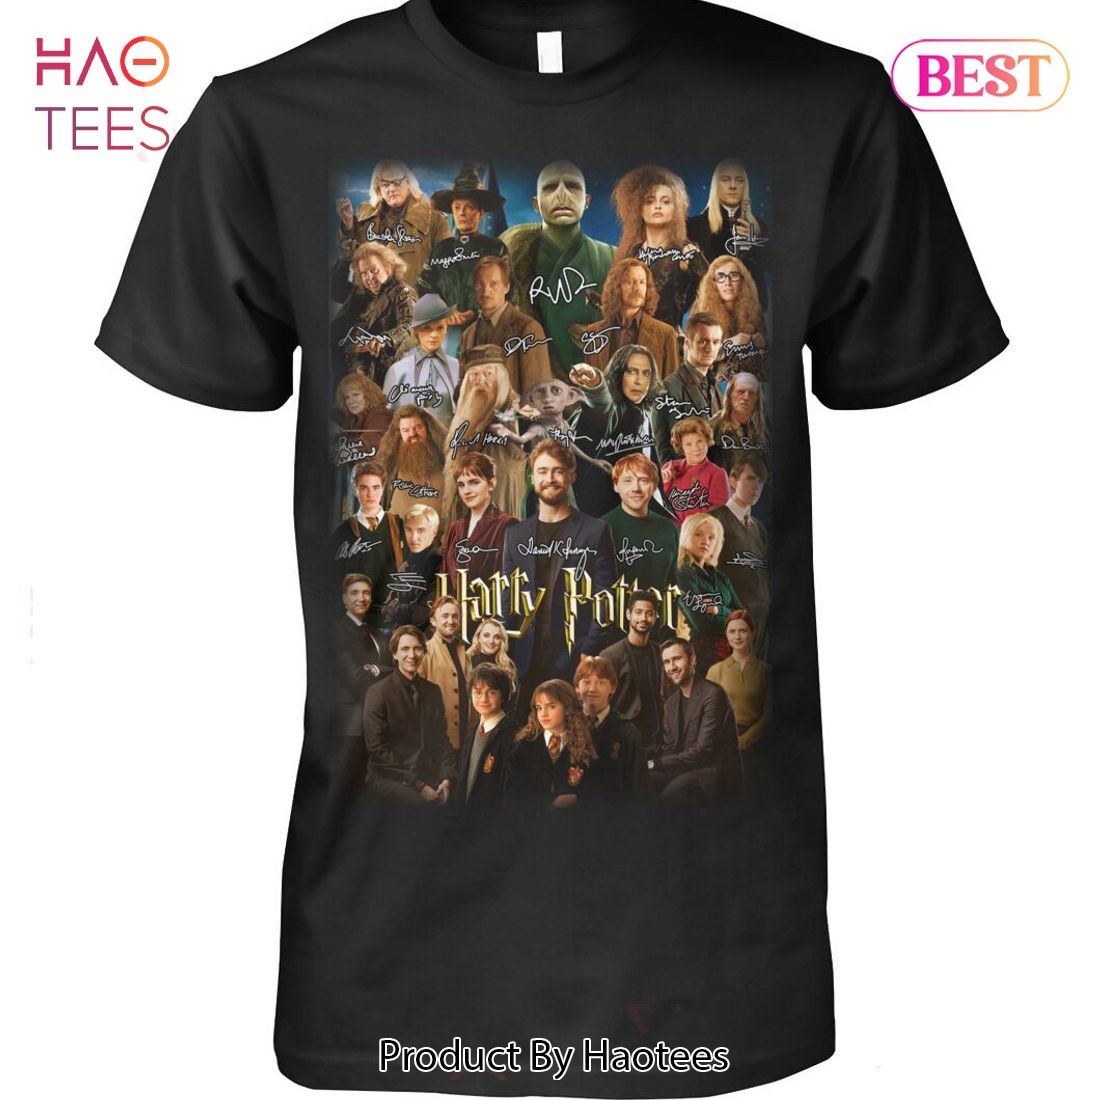 HOT TRENDING Harry Potter Movies Unisex T-Shirt